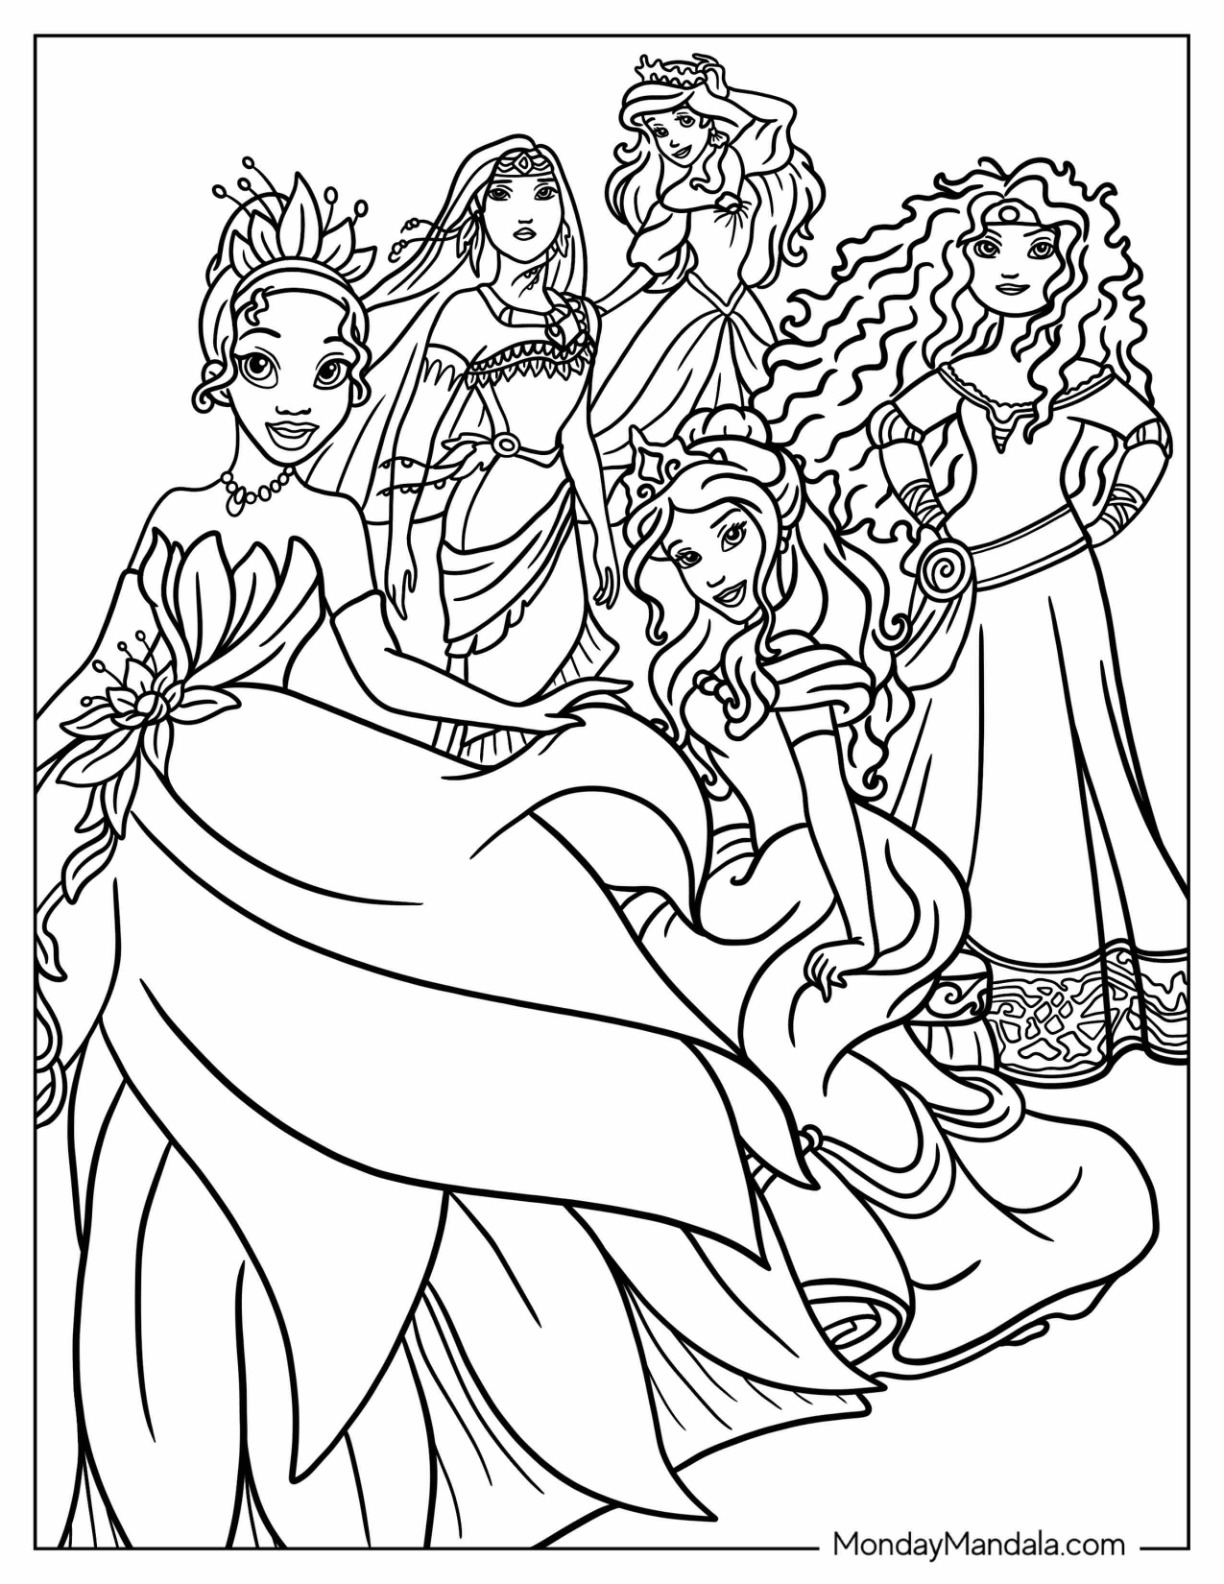 Disney princess coloring pages free pdf printables